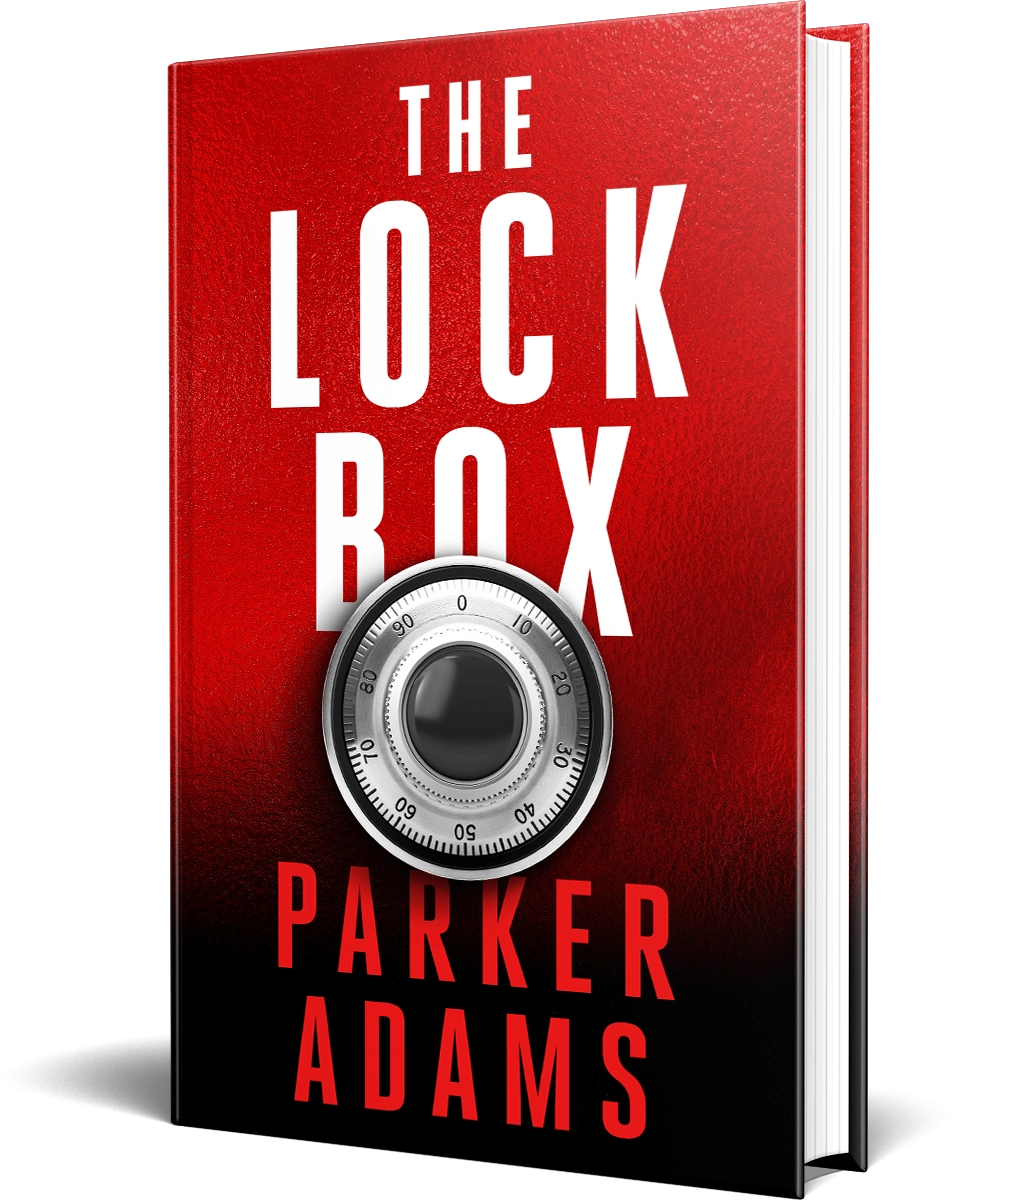 The Locke Box by Parker Adams